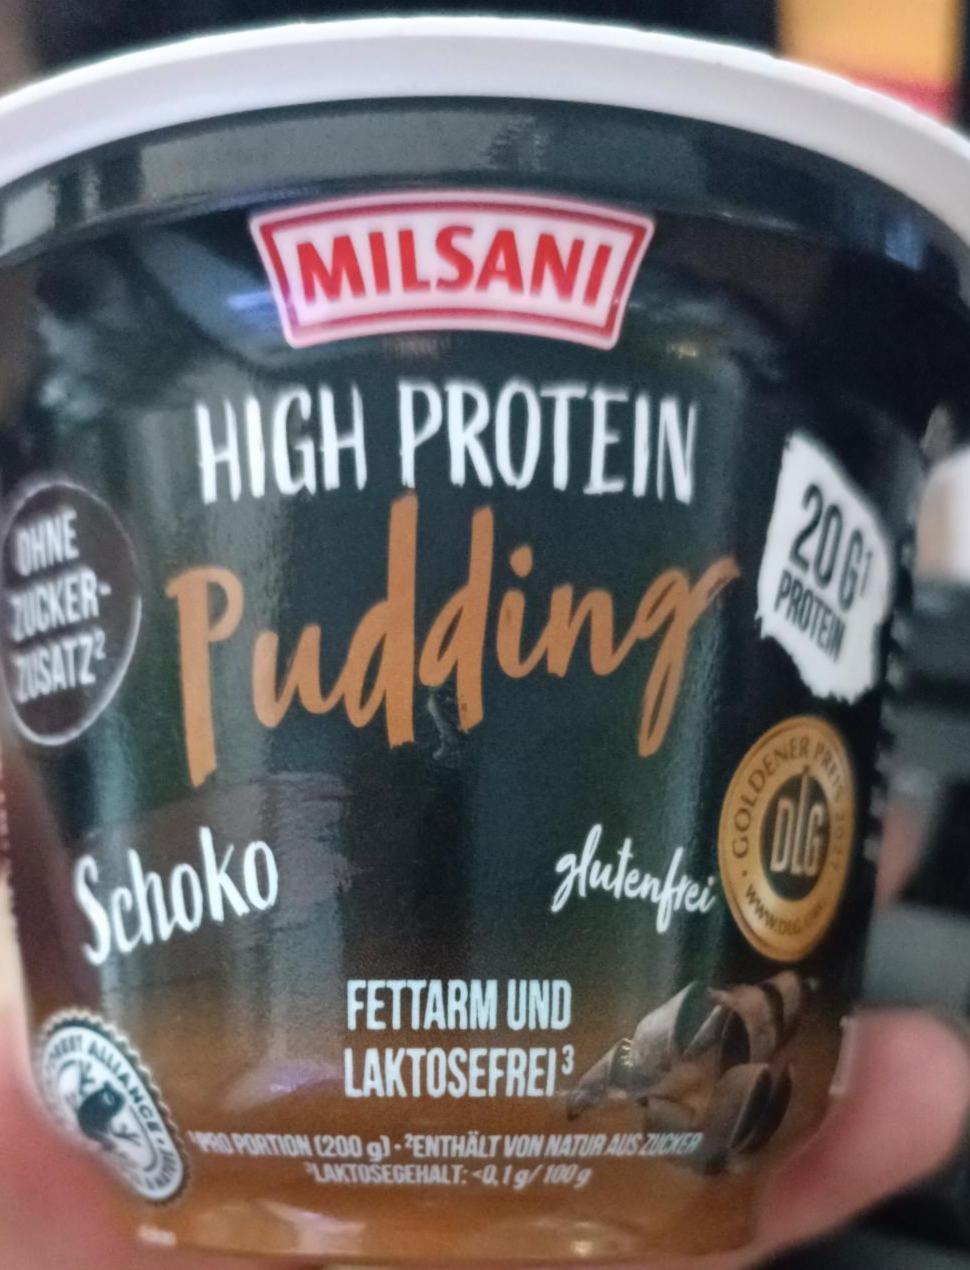 Fotografie - High Protein Pudding Schoko Milsani